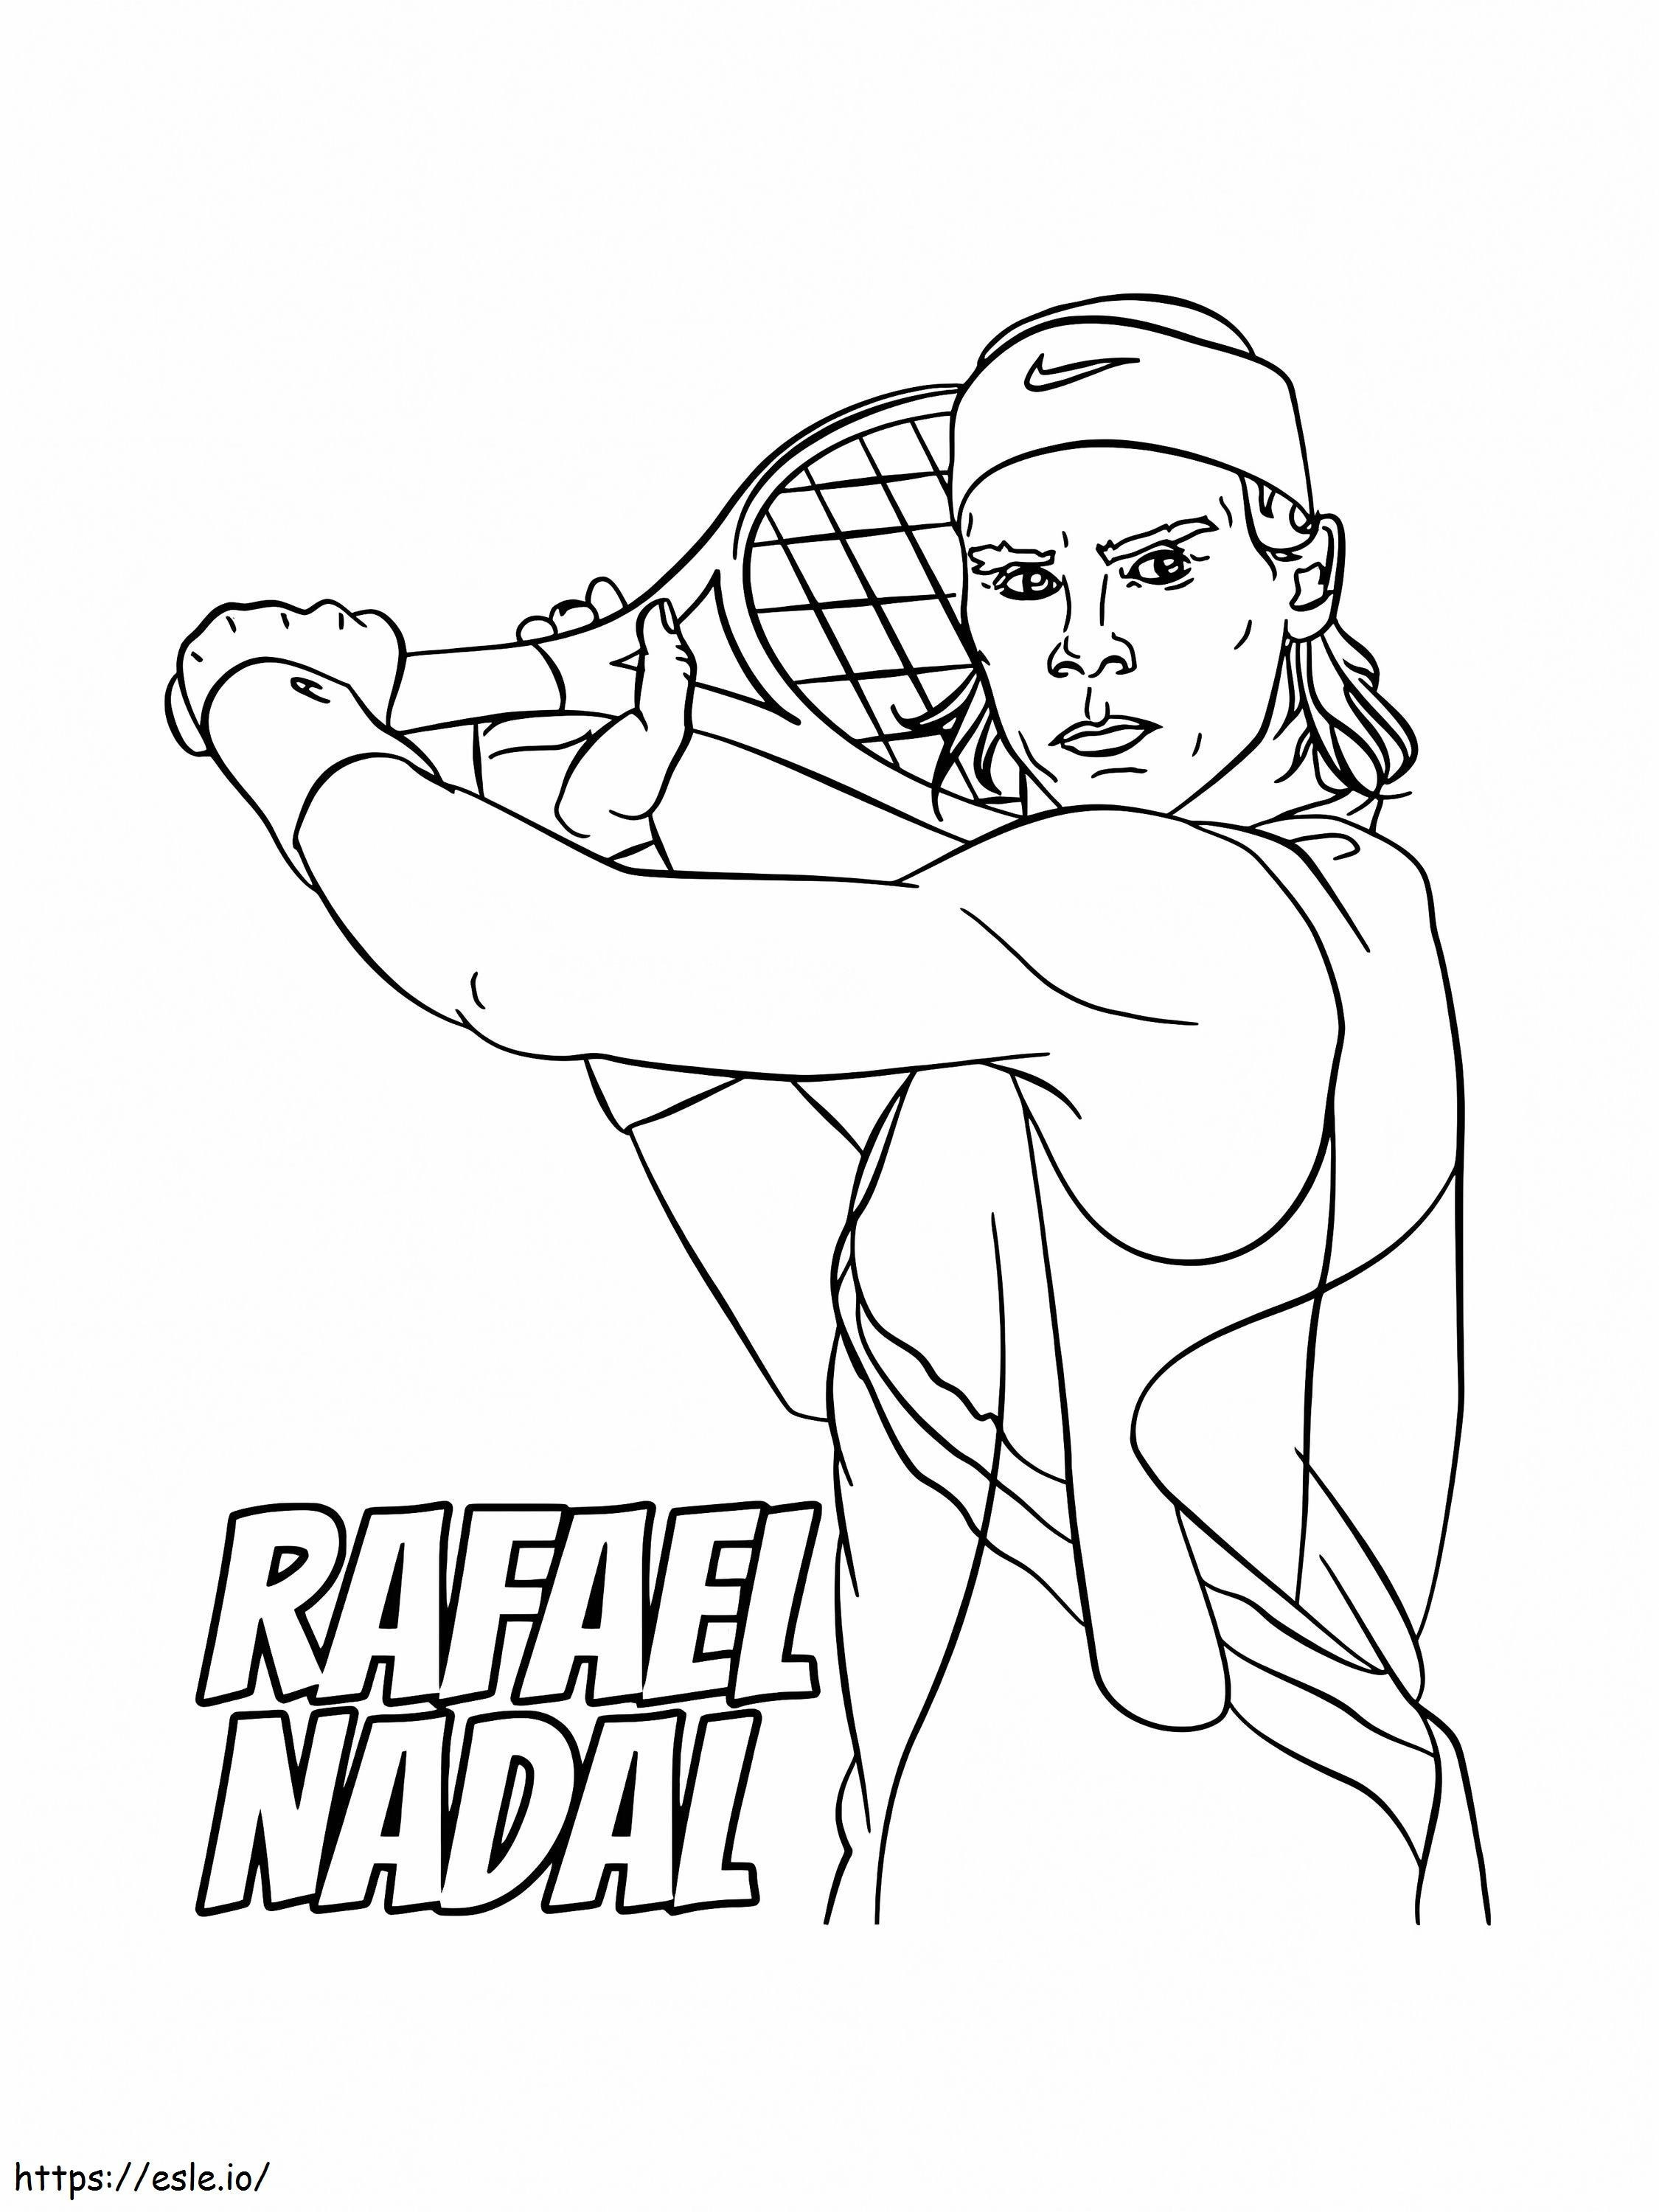 Rafael Nadal jucând tenis de colorat